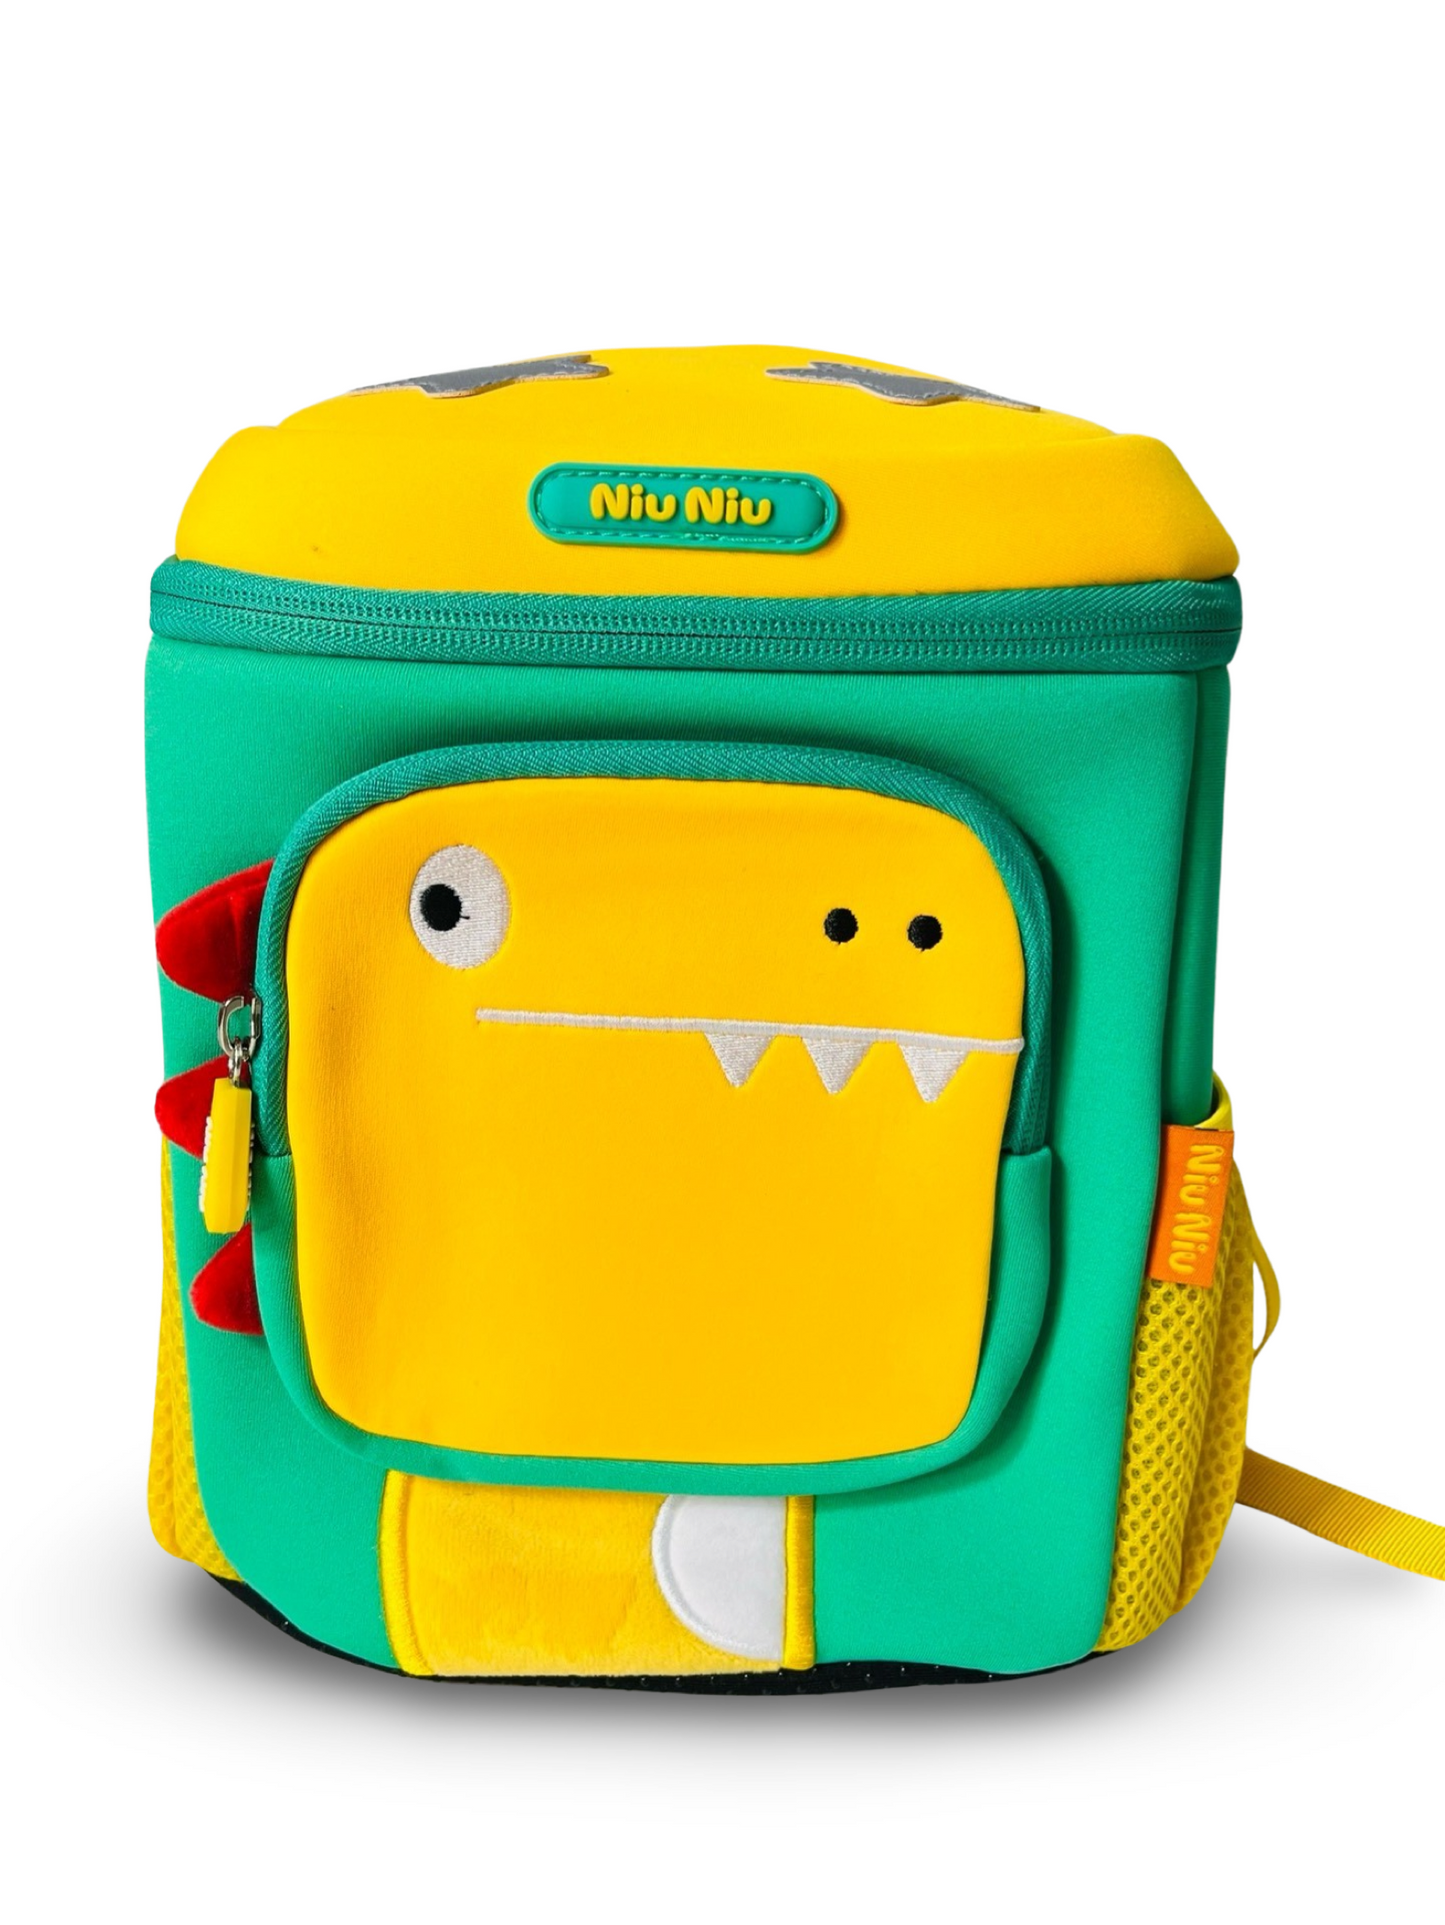 3D Dino large Capacity School Bag for Kindergarten/ Pre School/ Nursery Kids